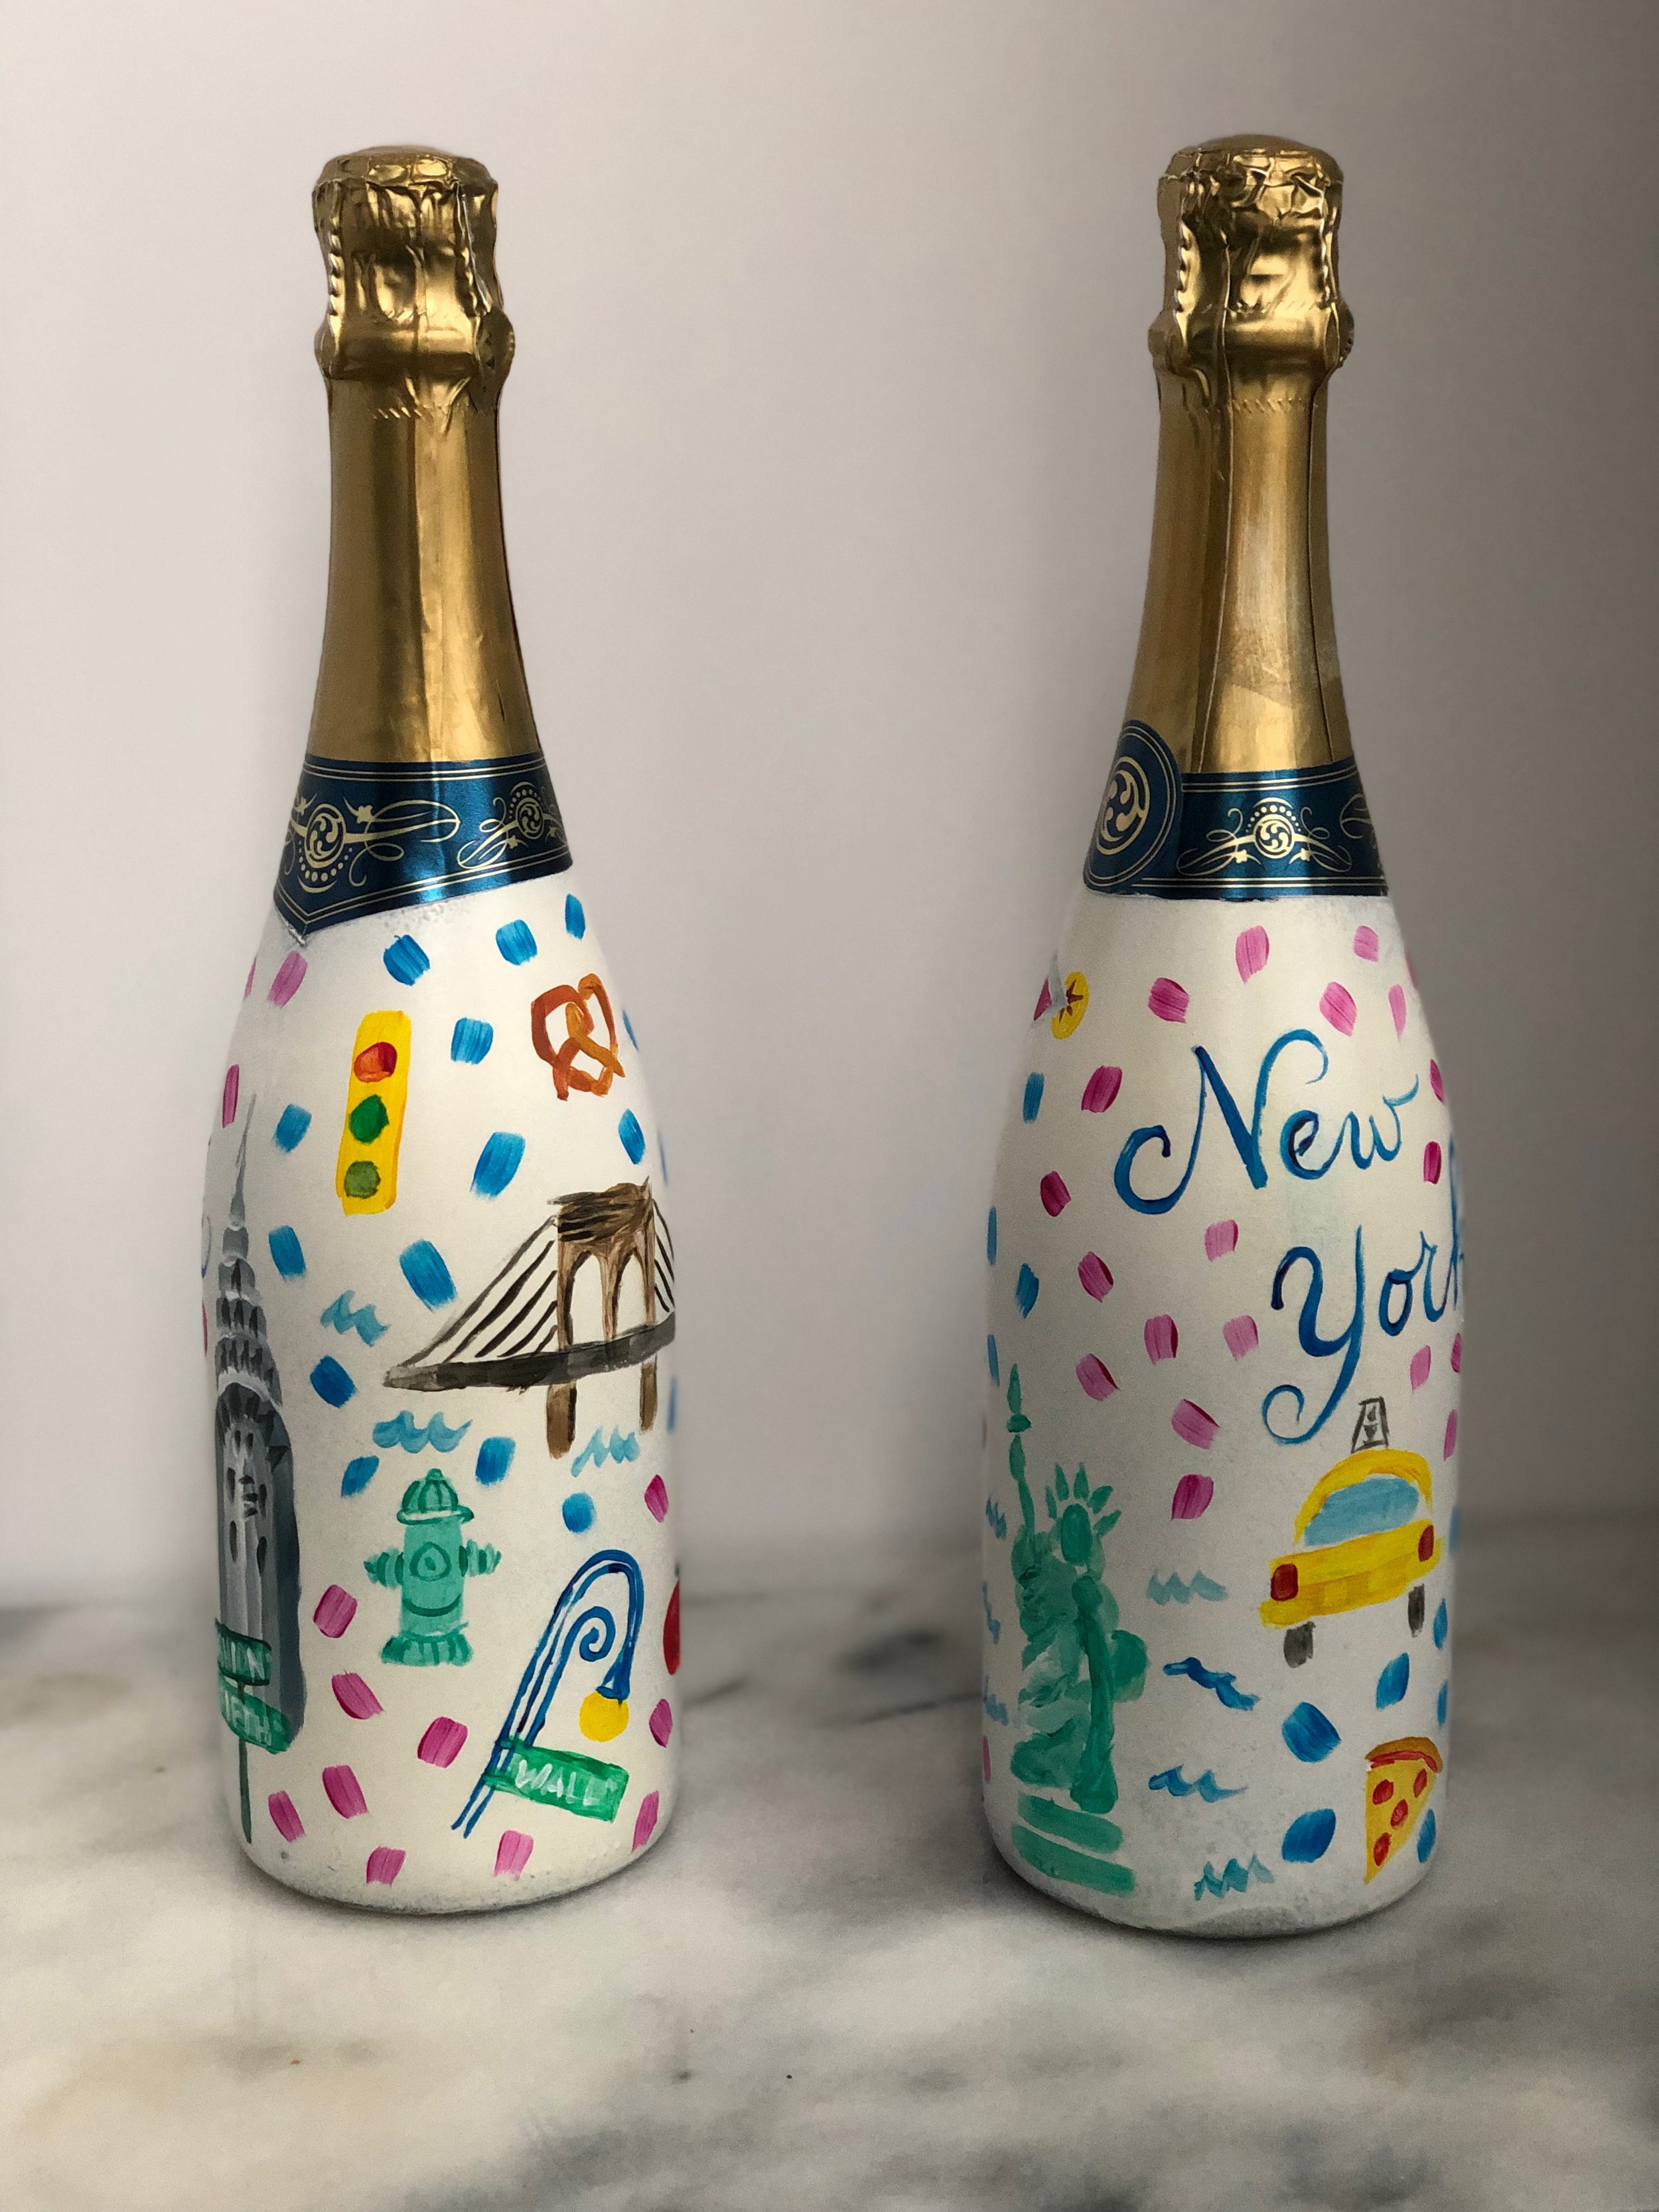 Bespoke Painted Champagne Bottles | @beesandbubbles